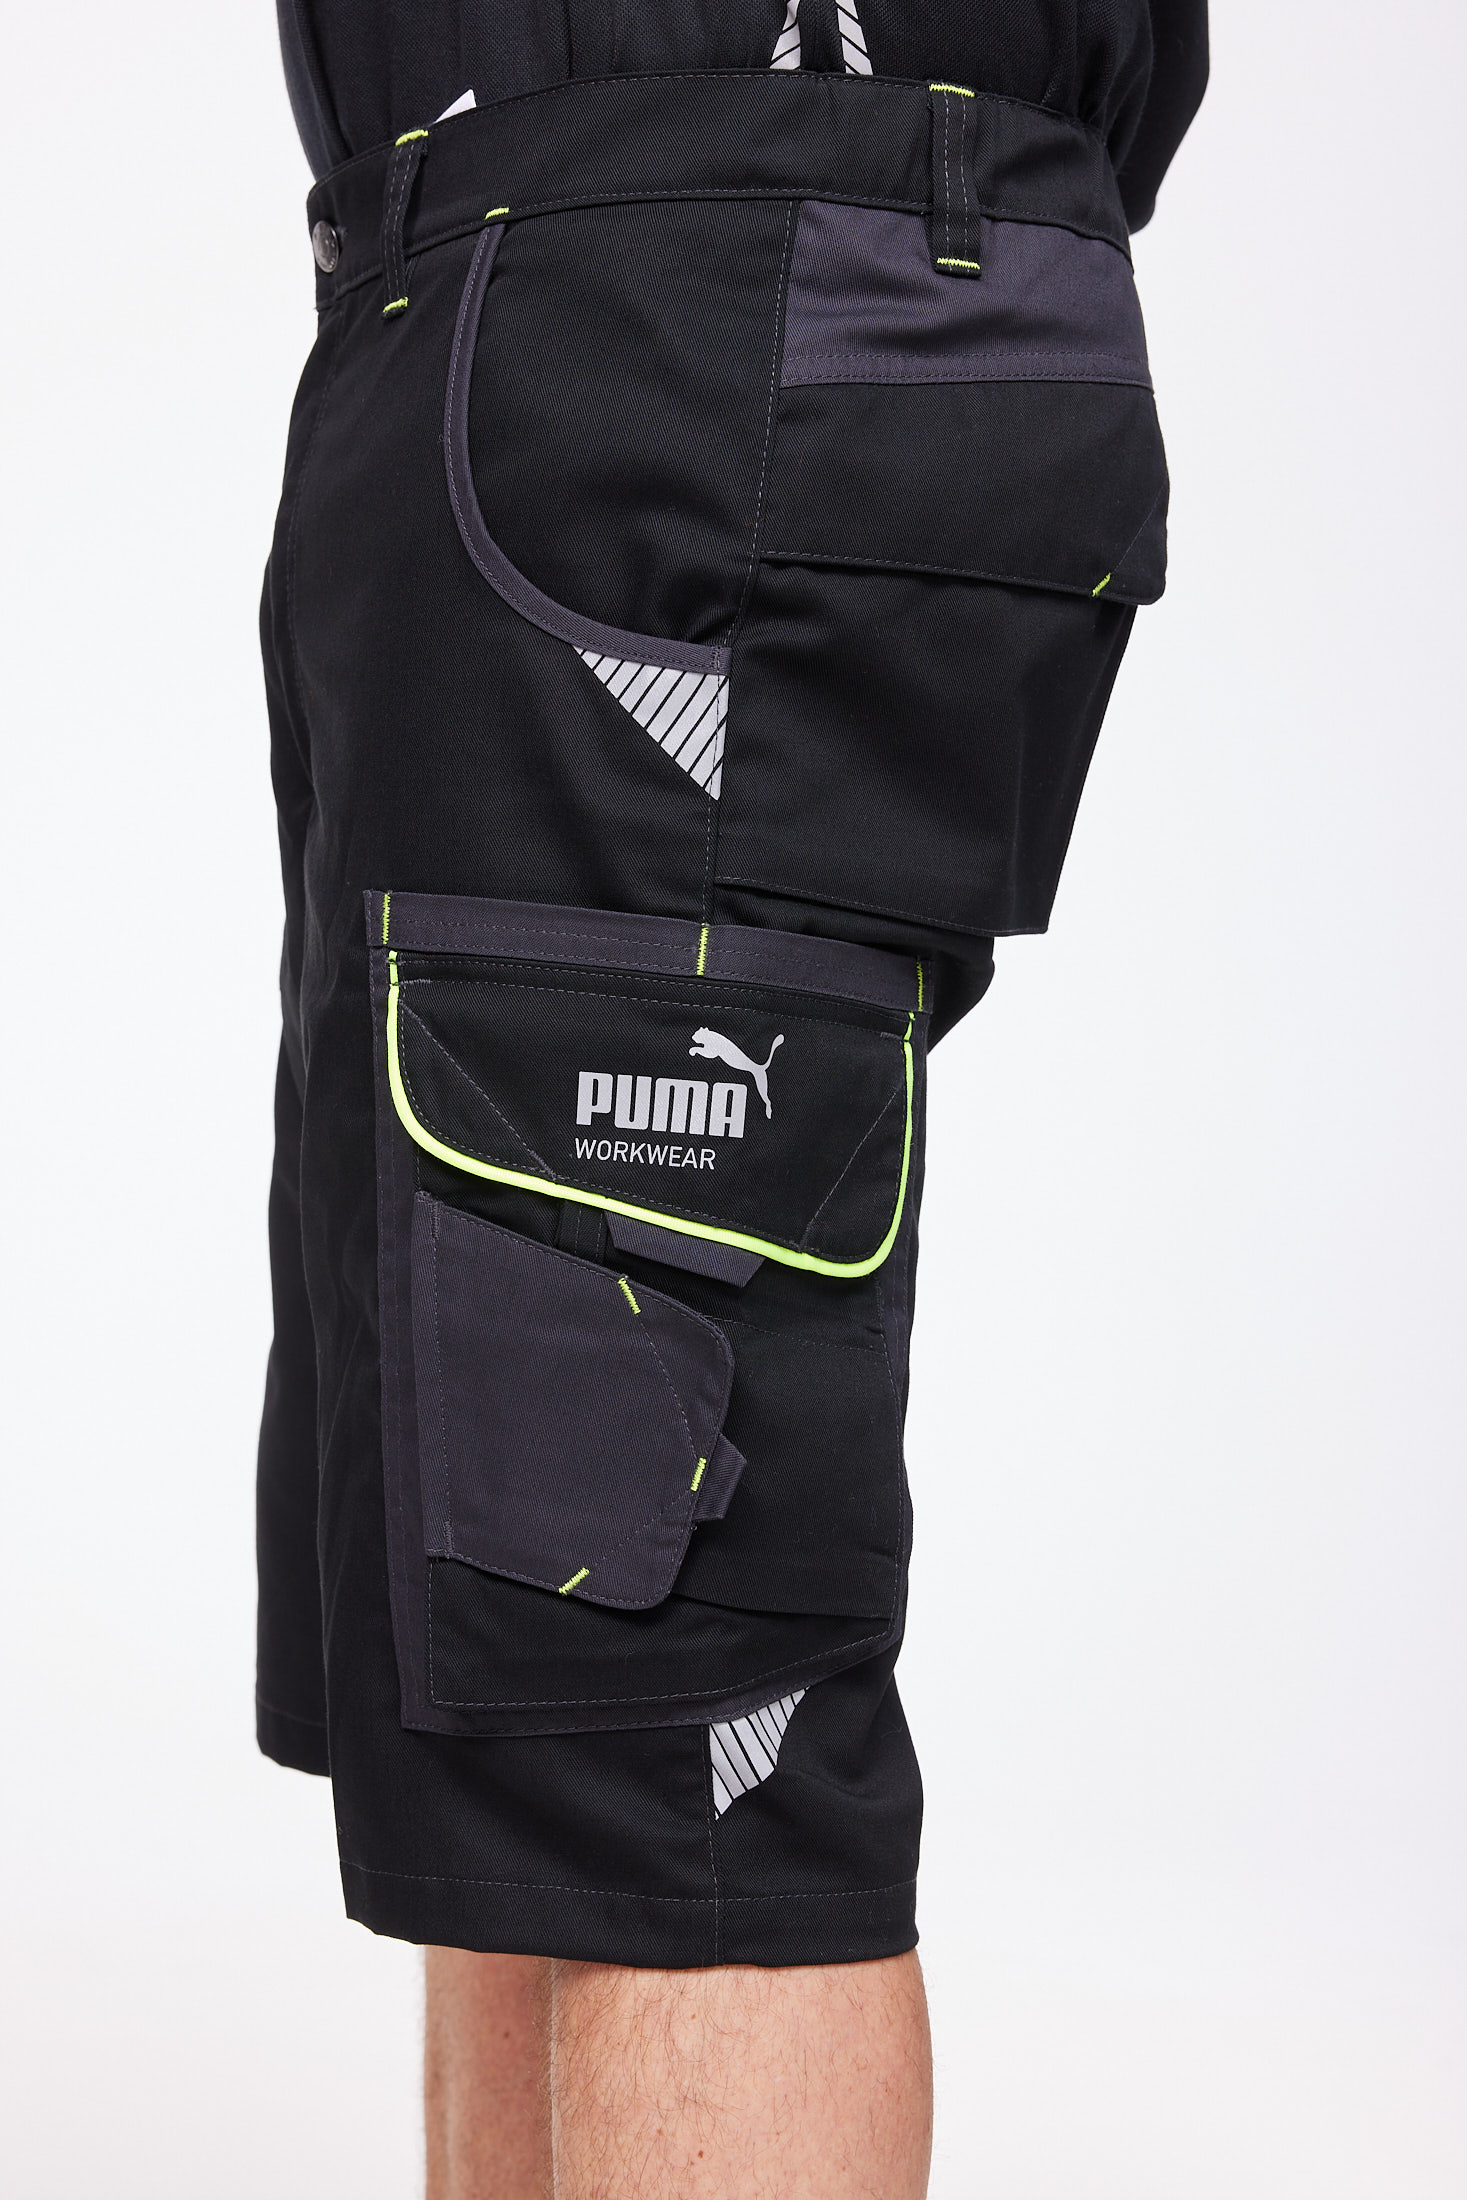 PUMA Workwear Precision Shorts X Puma Herren Workwear 